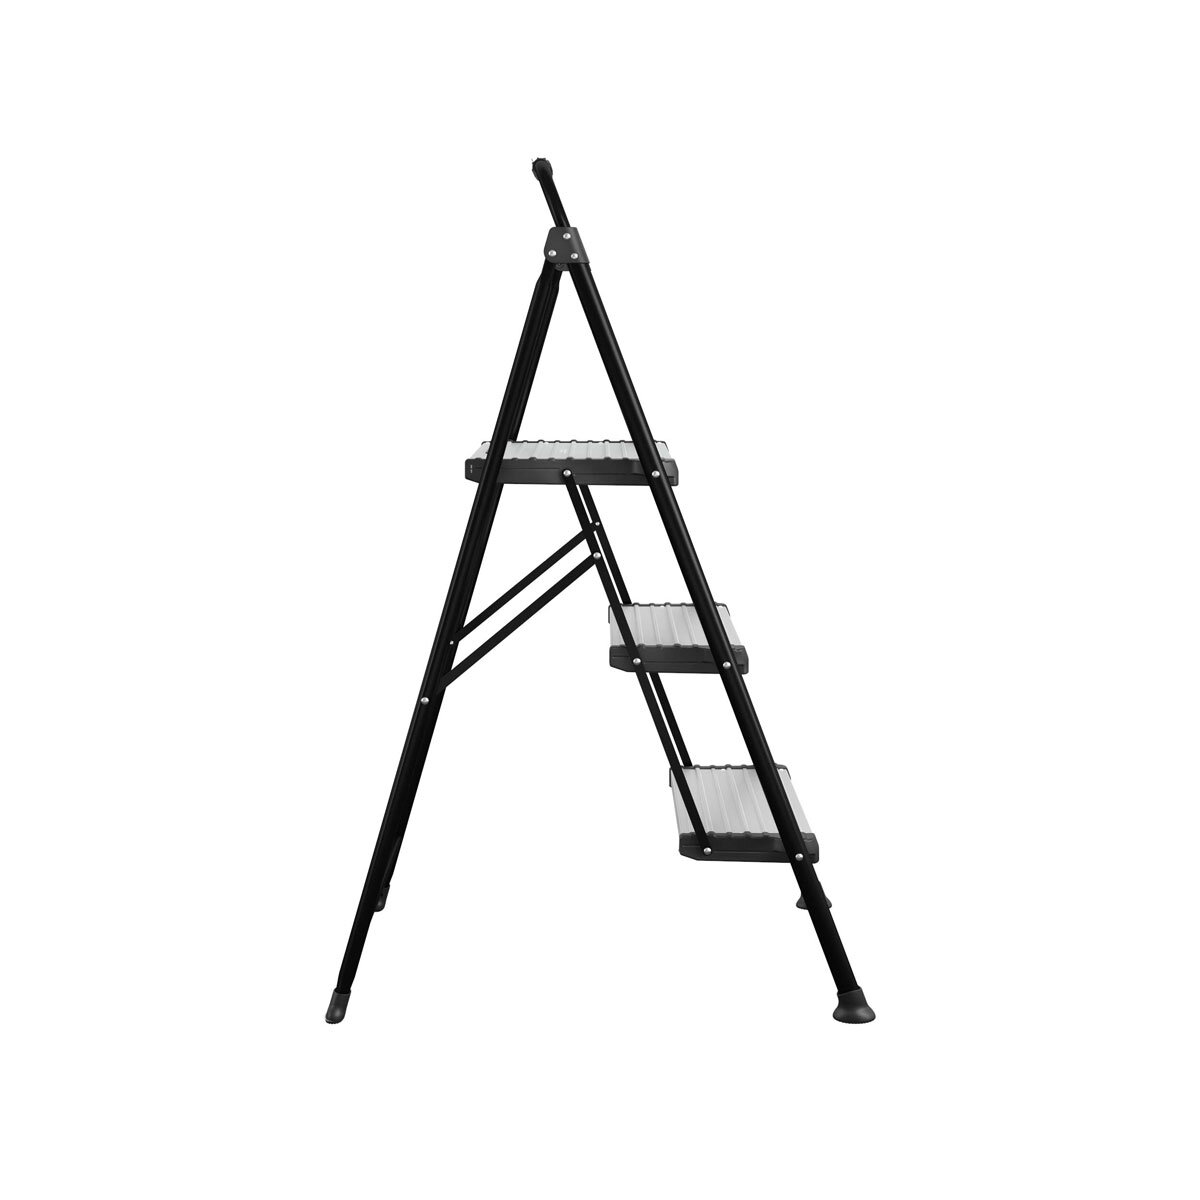 Ladder side view